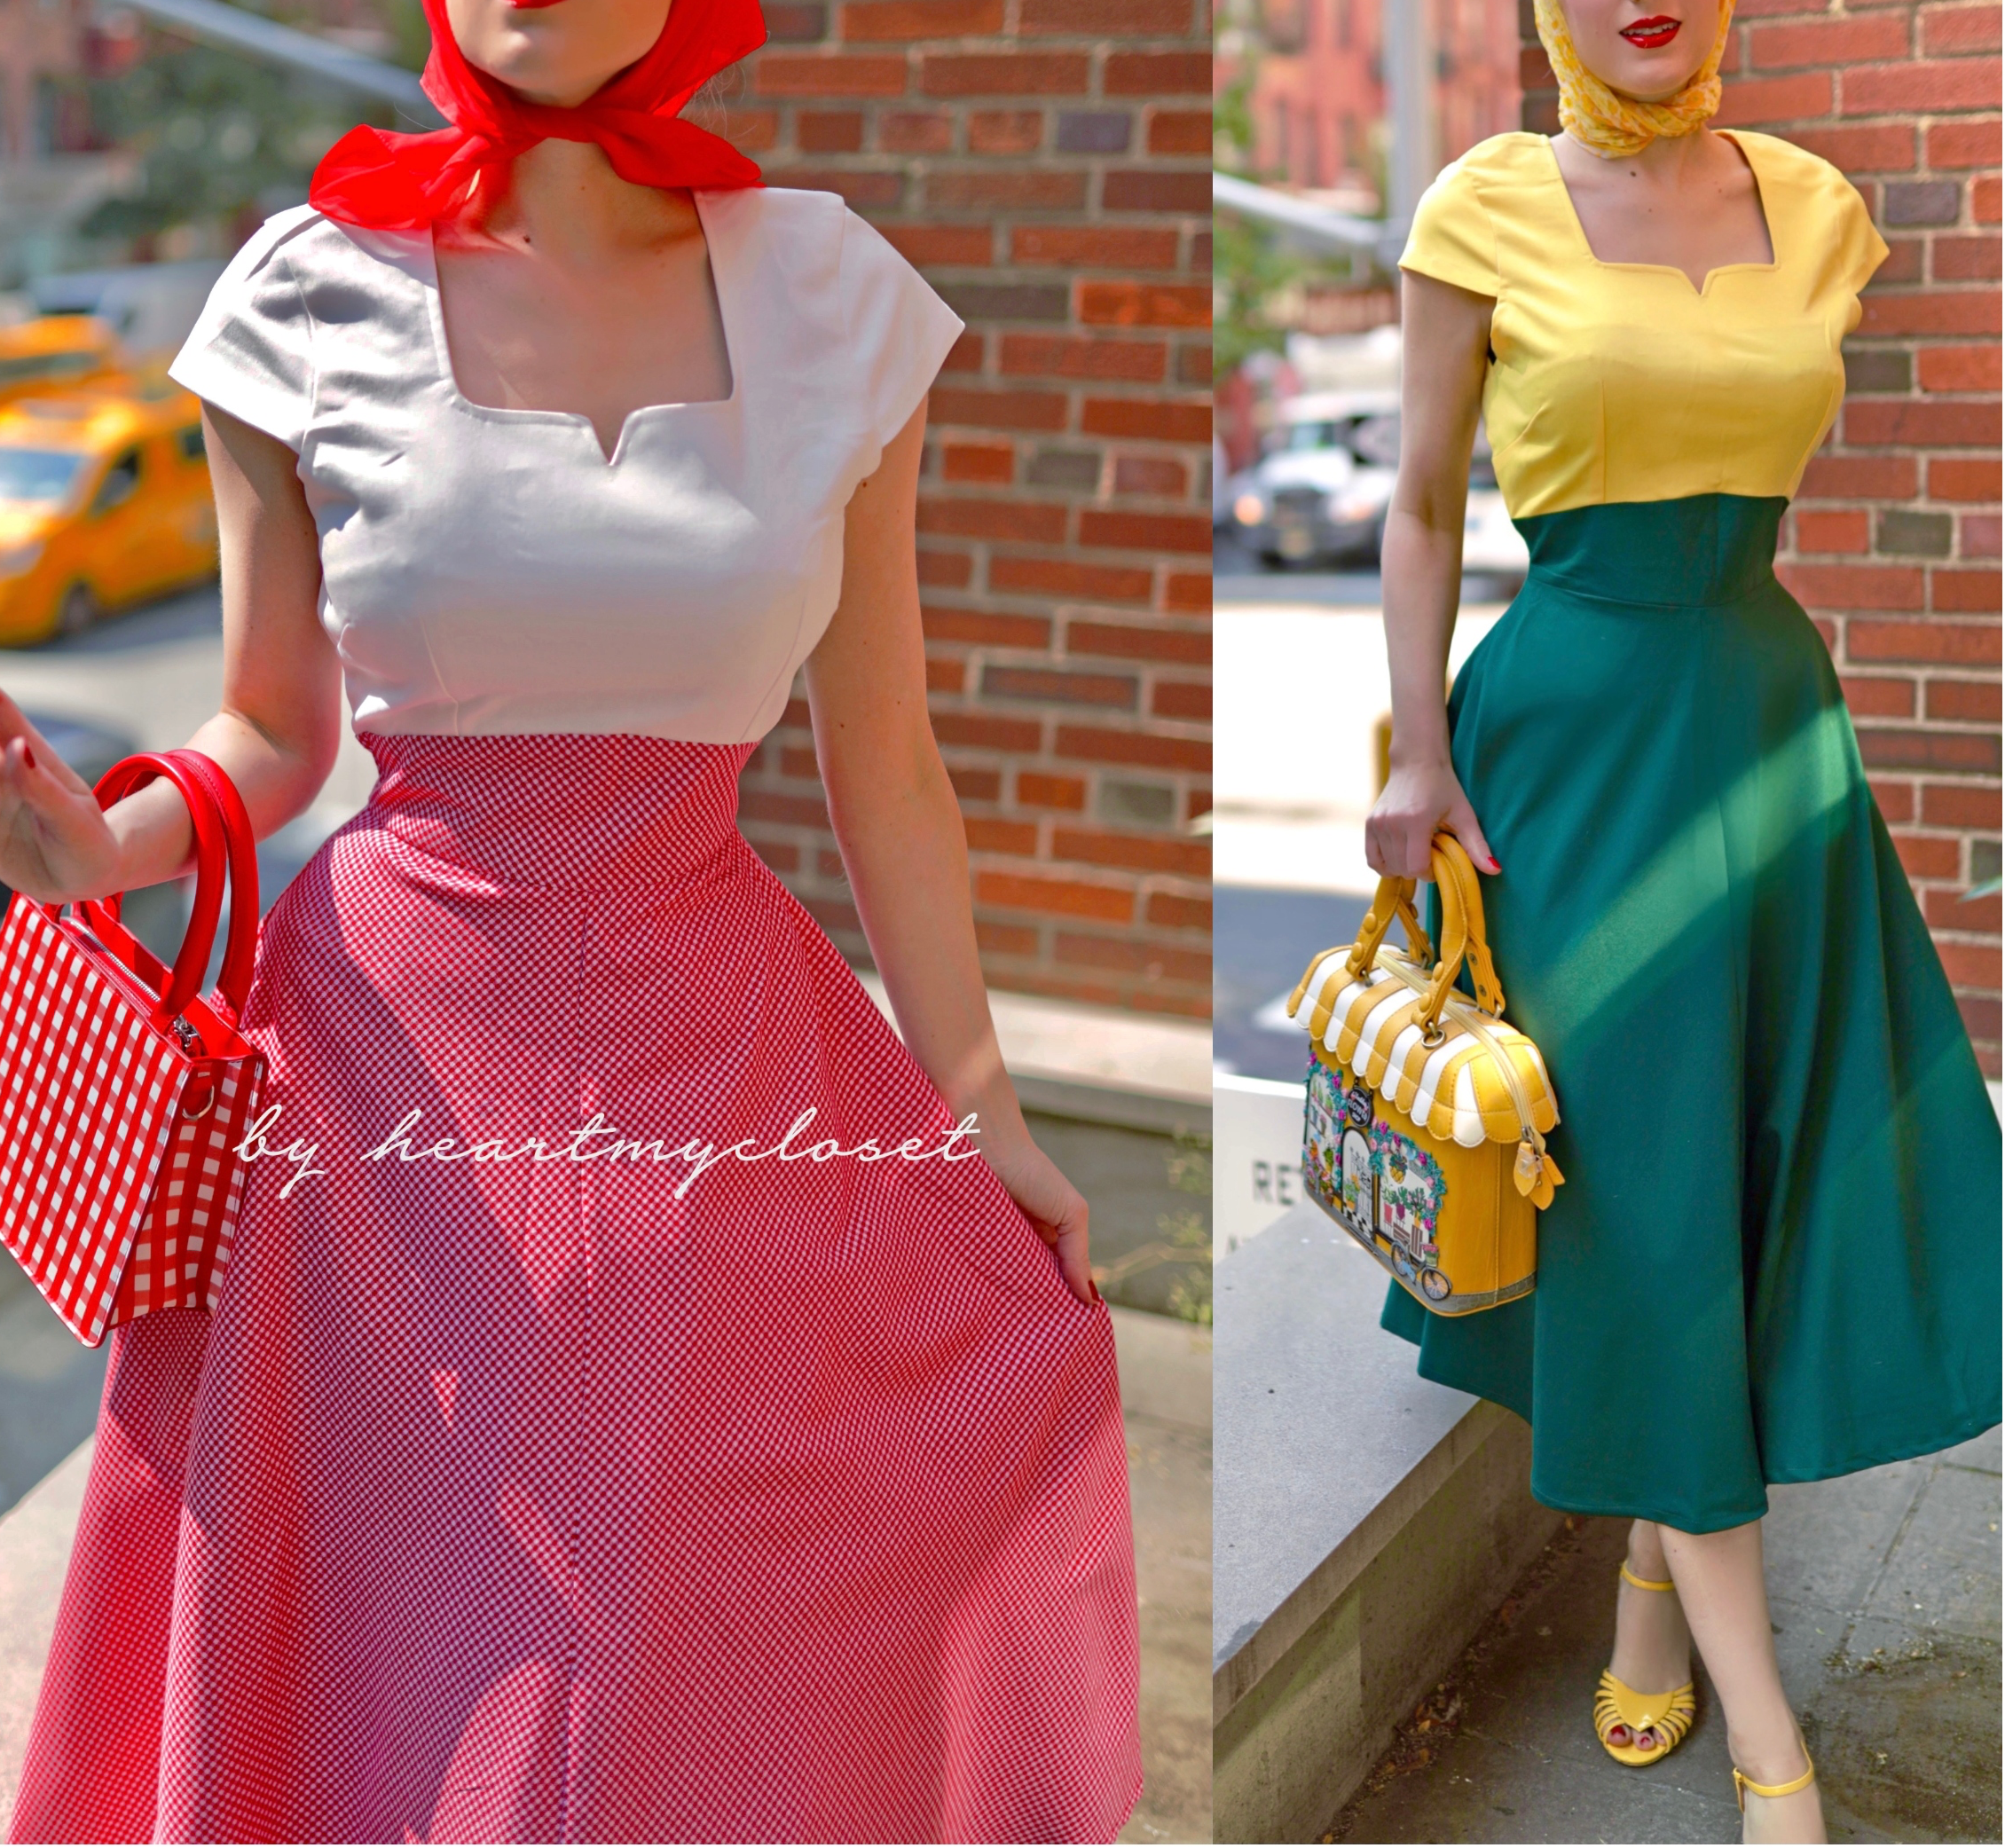  Women's Vintage Polka Dot Dress Retro 1950s Style Cap